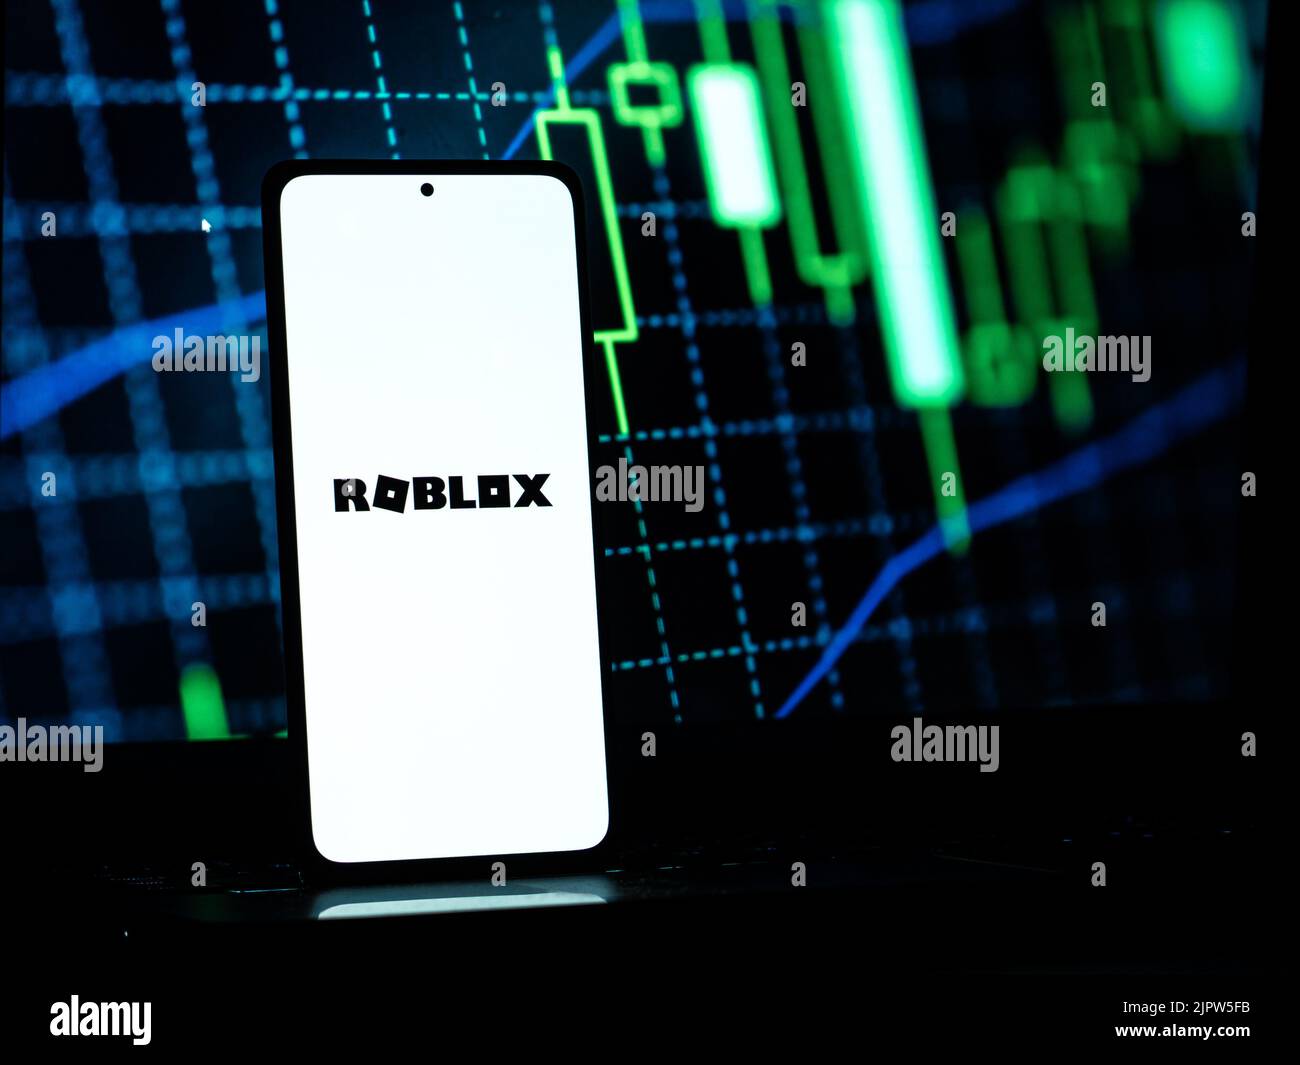 West Bangal, India - April 20, 2022 : Roblox phone screen stock image. Stock Photo